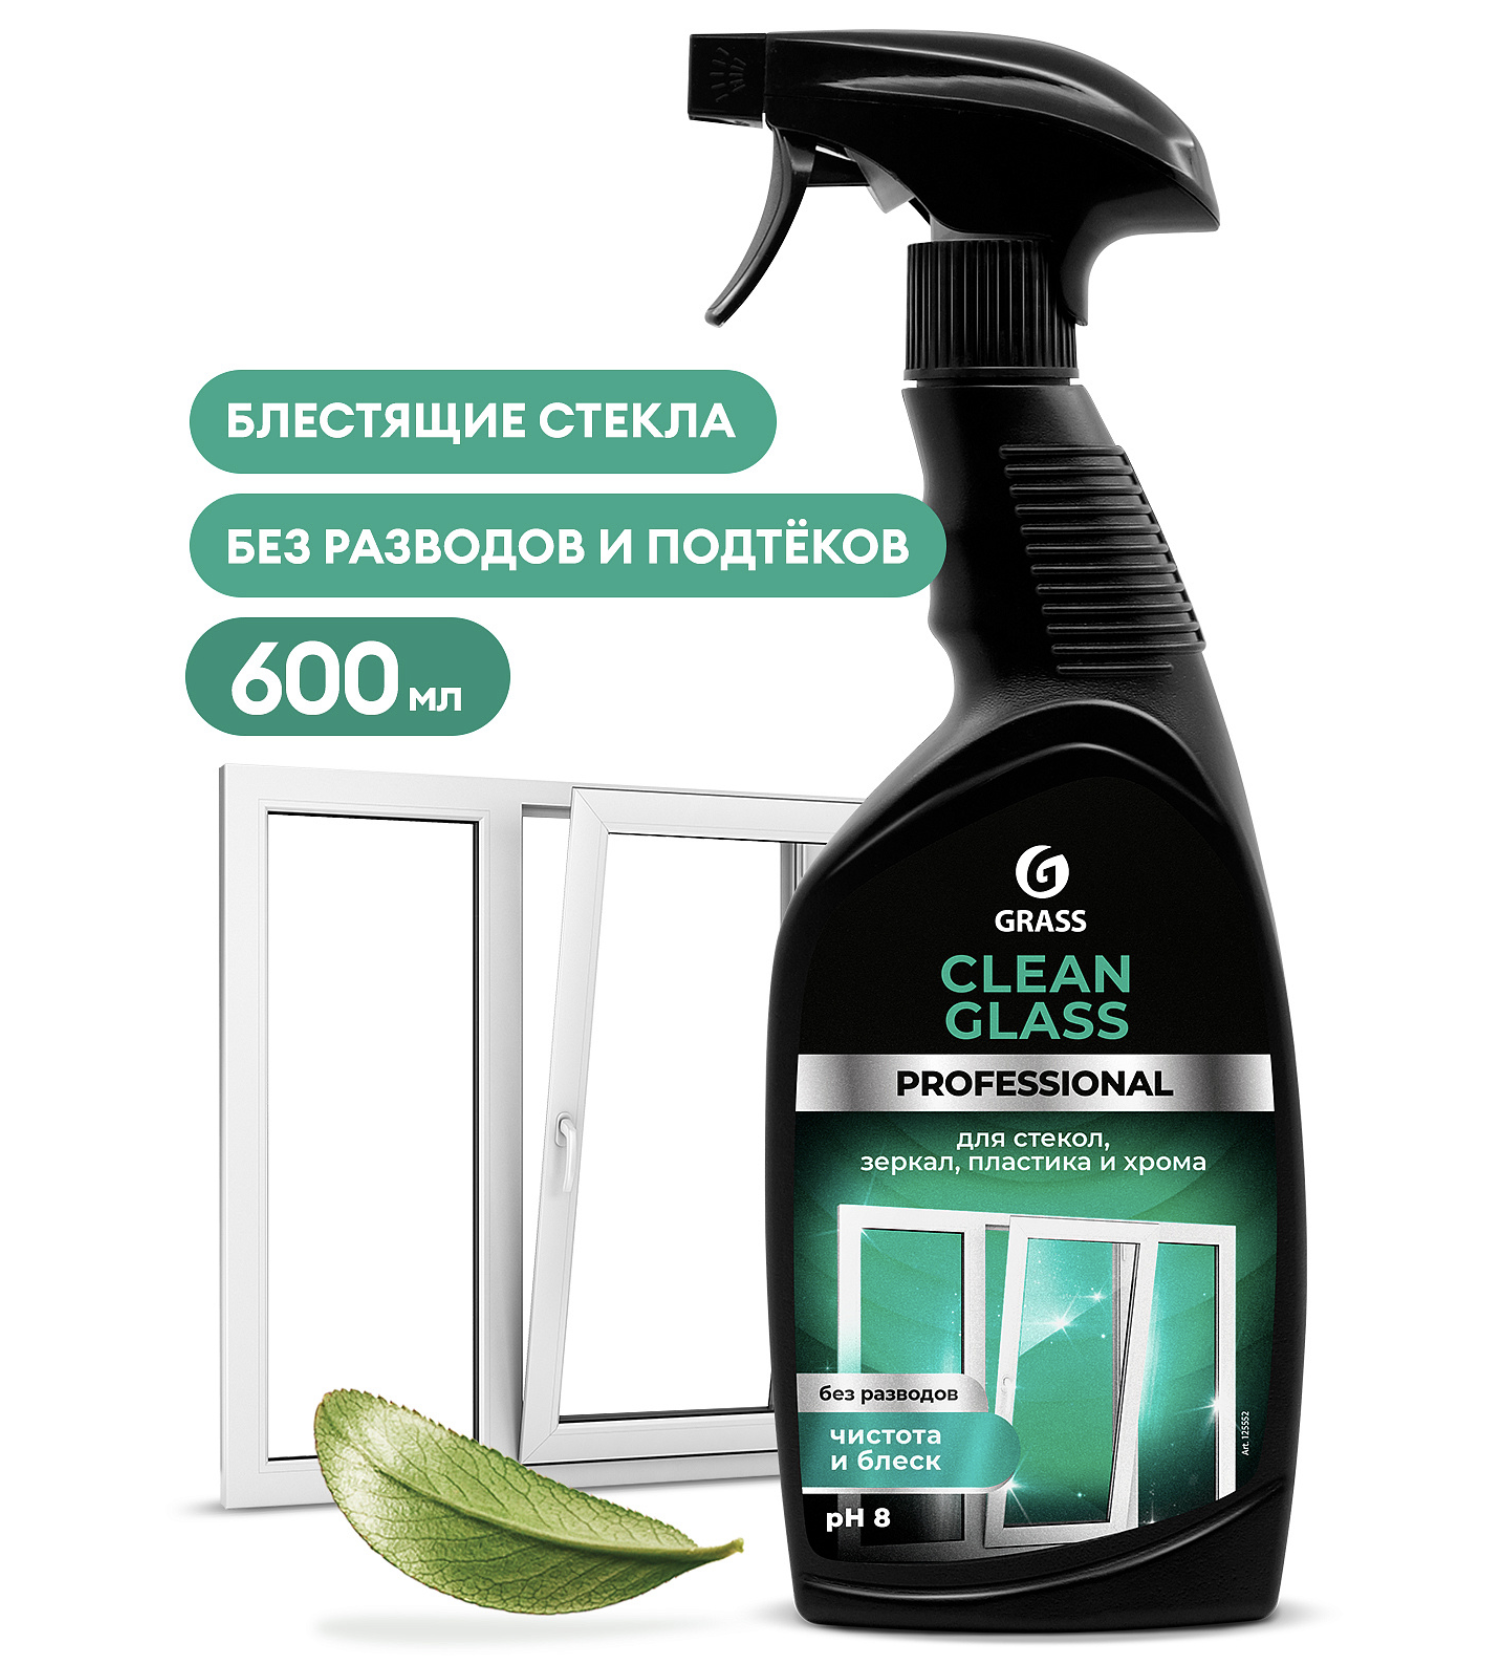   / Grass Clean Glass Professional -    ,,   600 